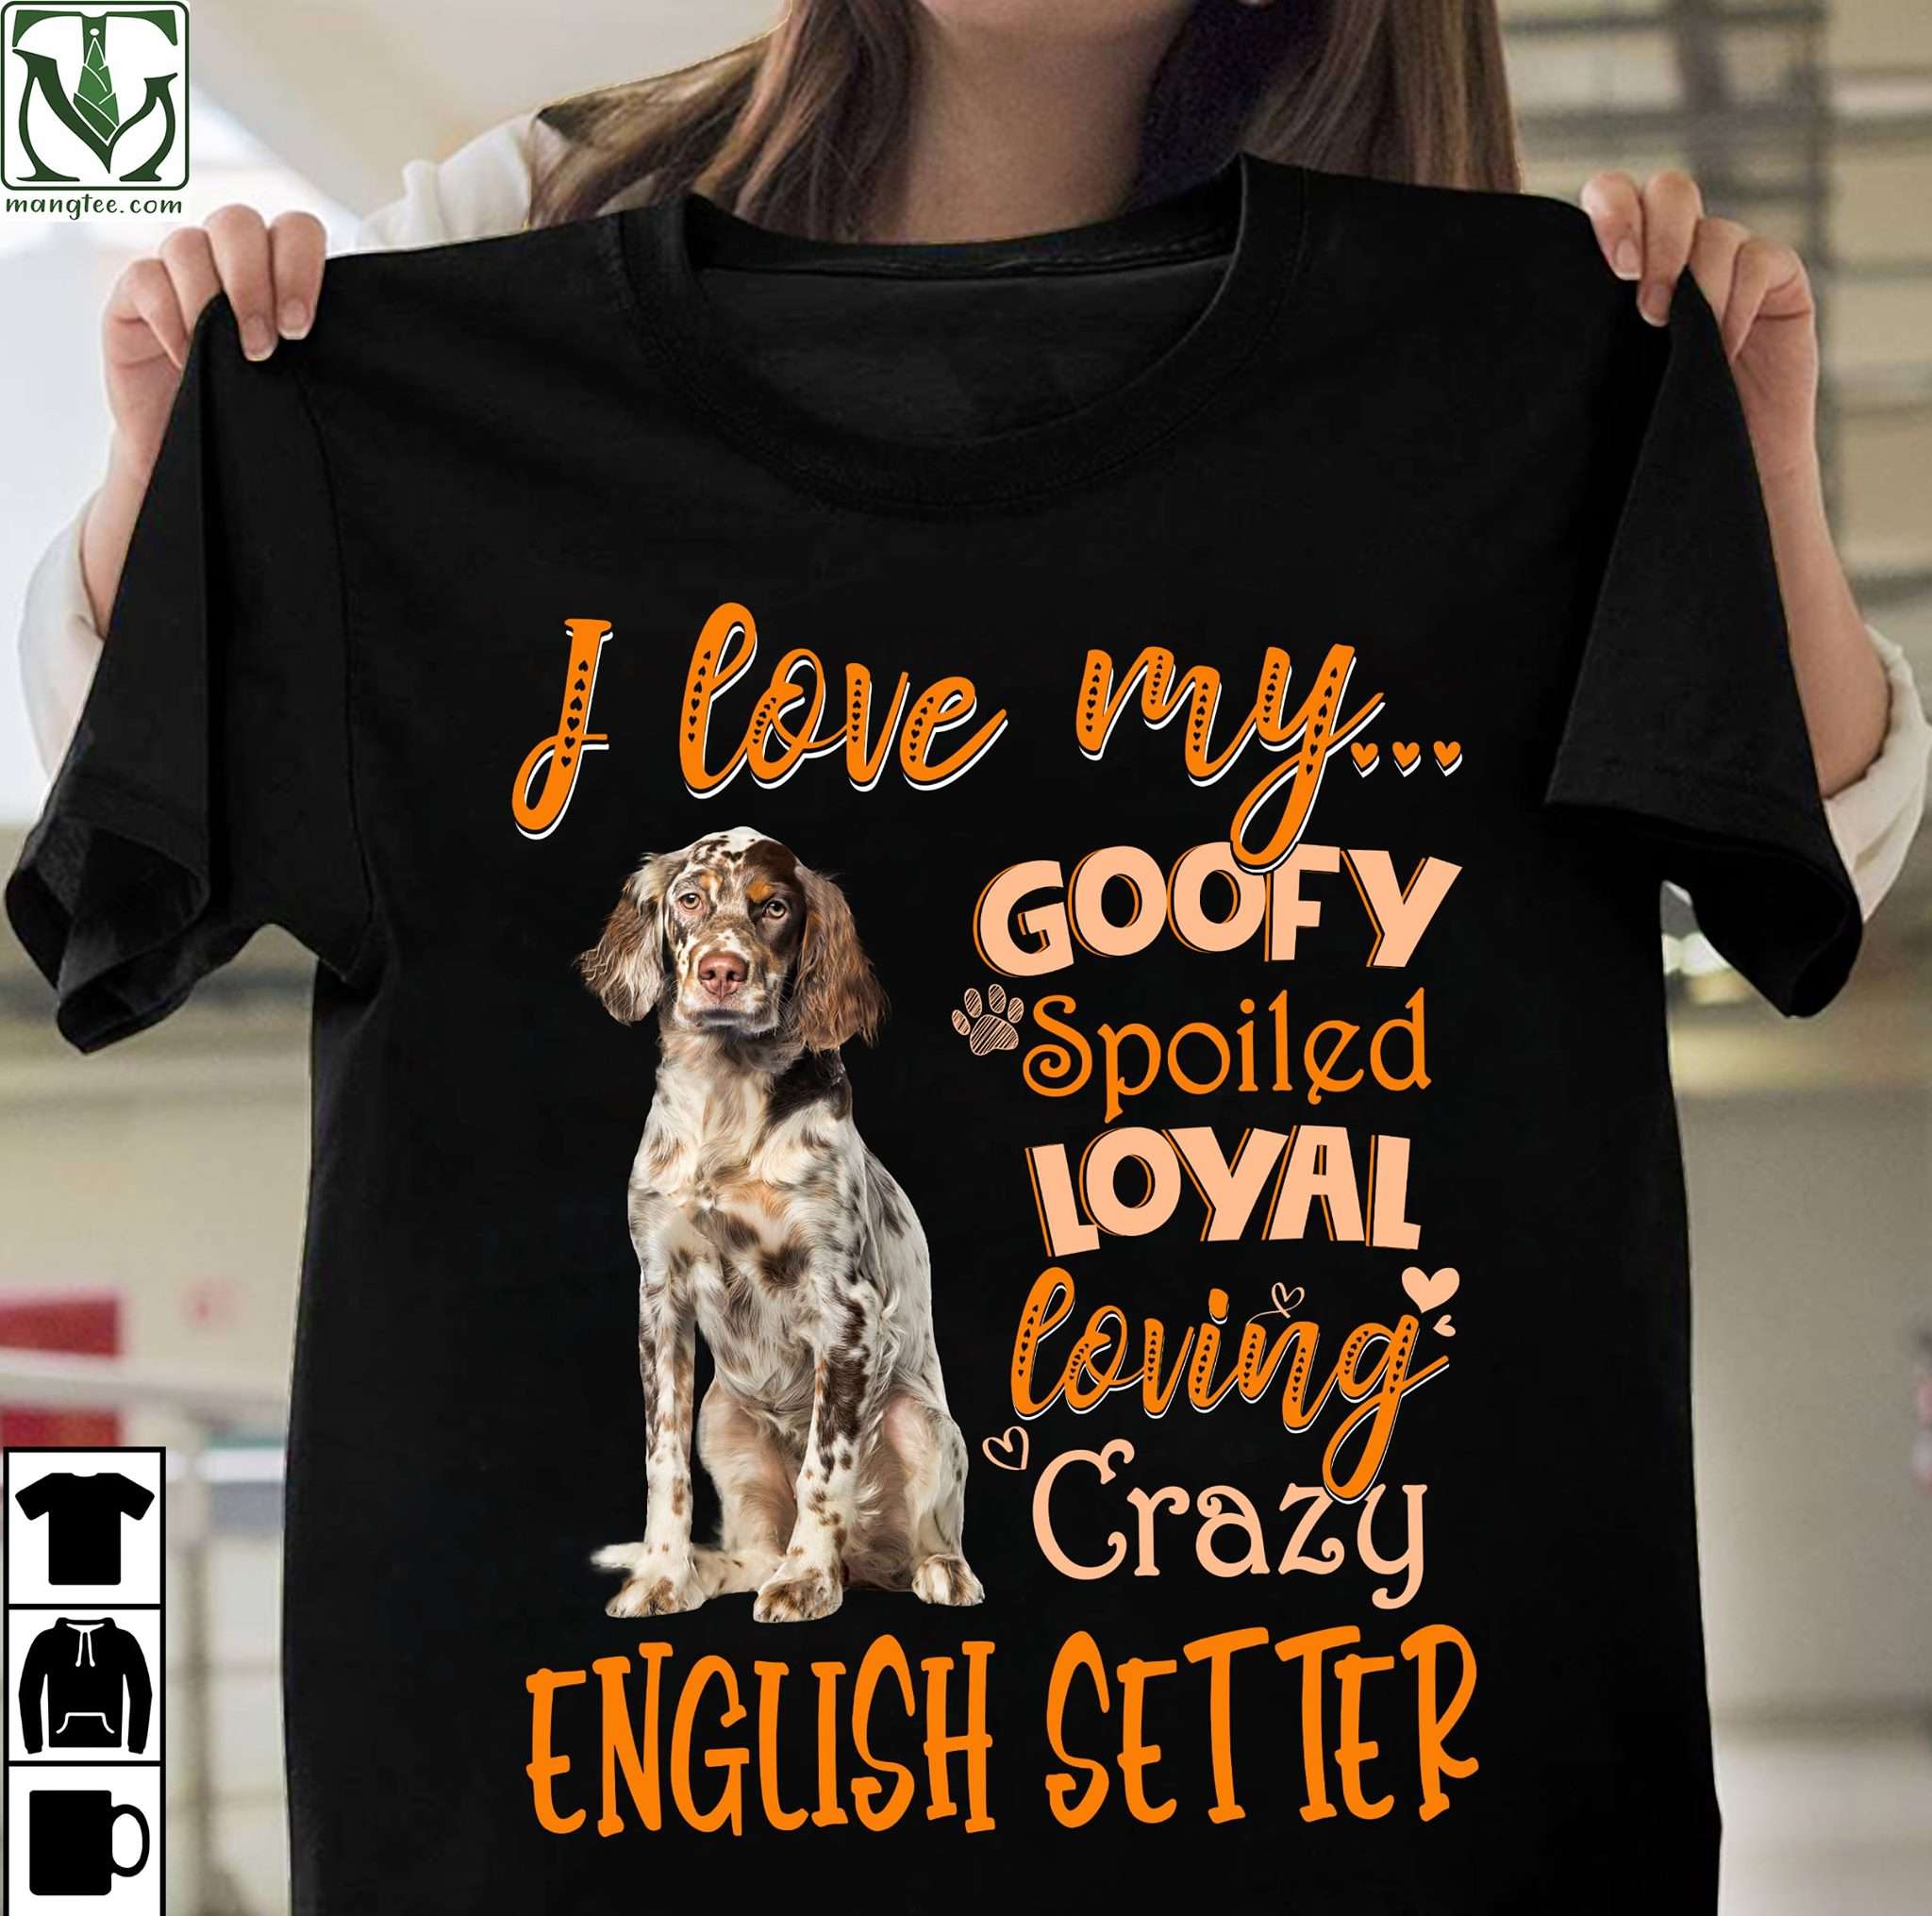 I love my goofy spoiled loyal loving crazy English setter - Dog the loyal animal